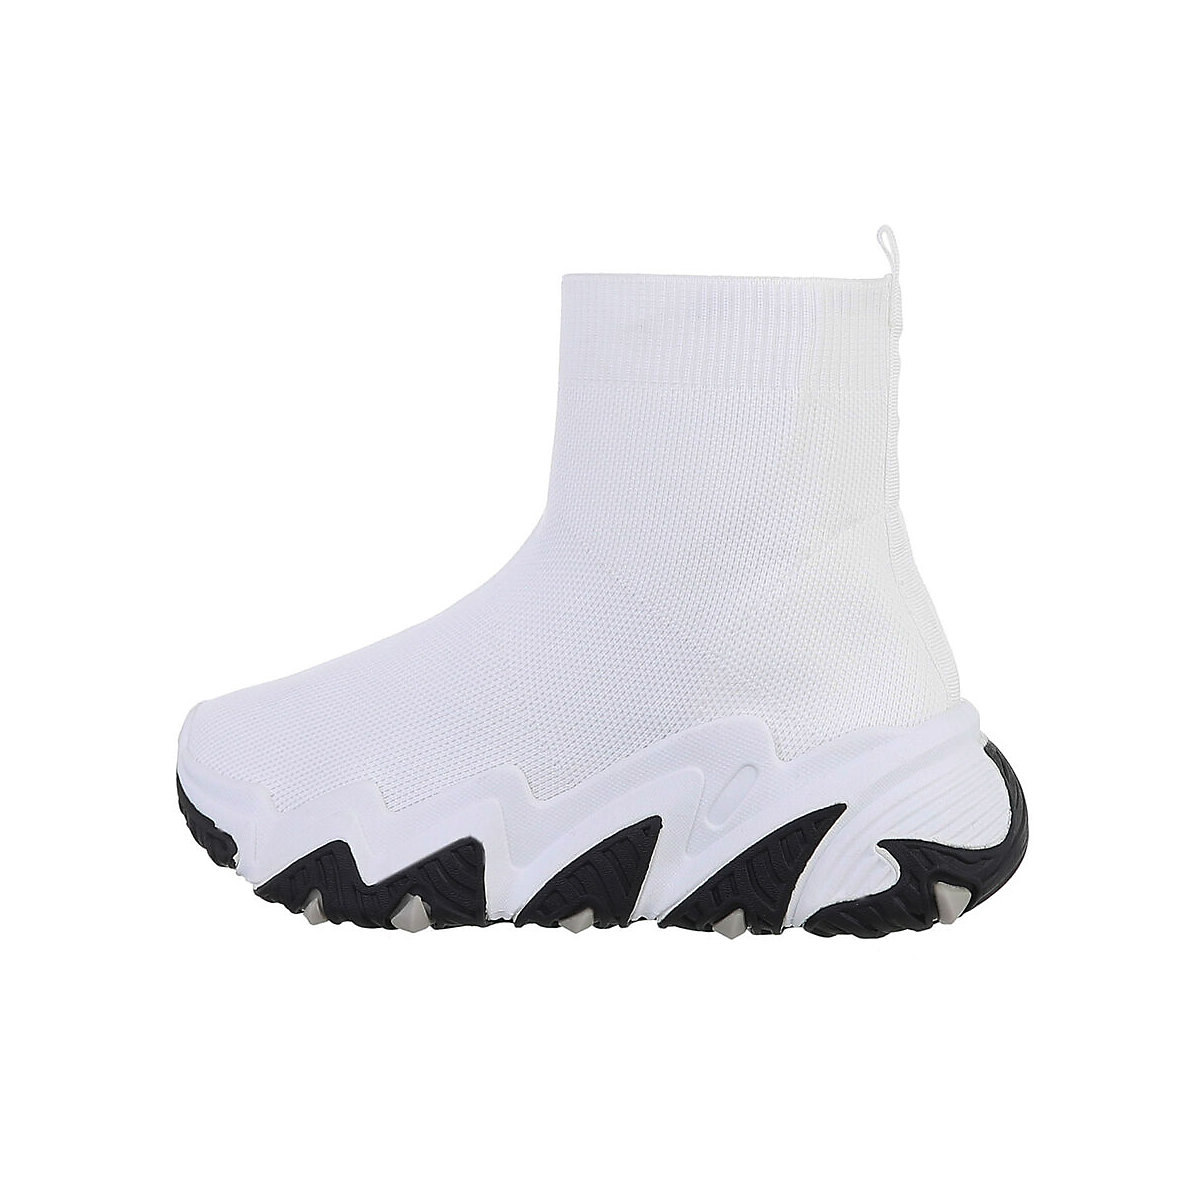 Ital-Design Sneakers High Flach weiß